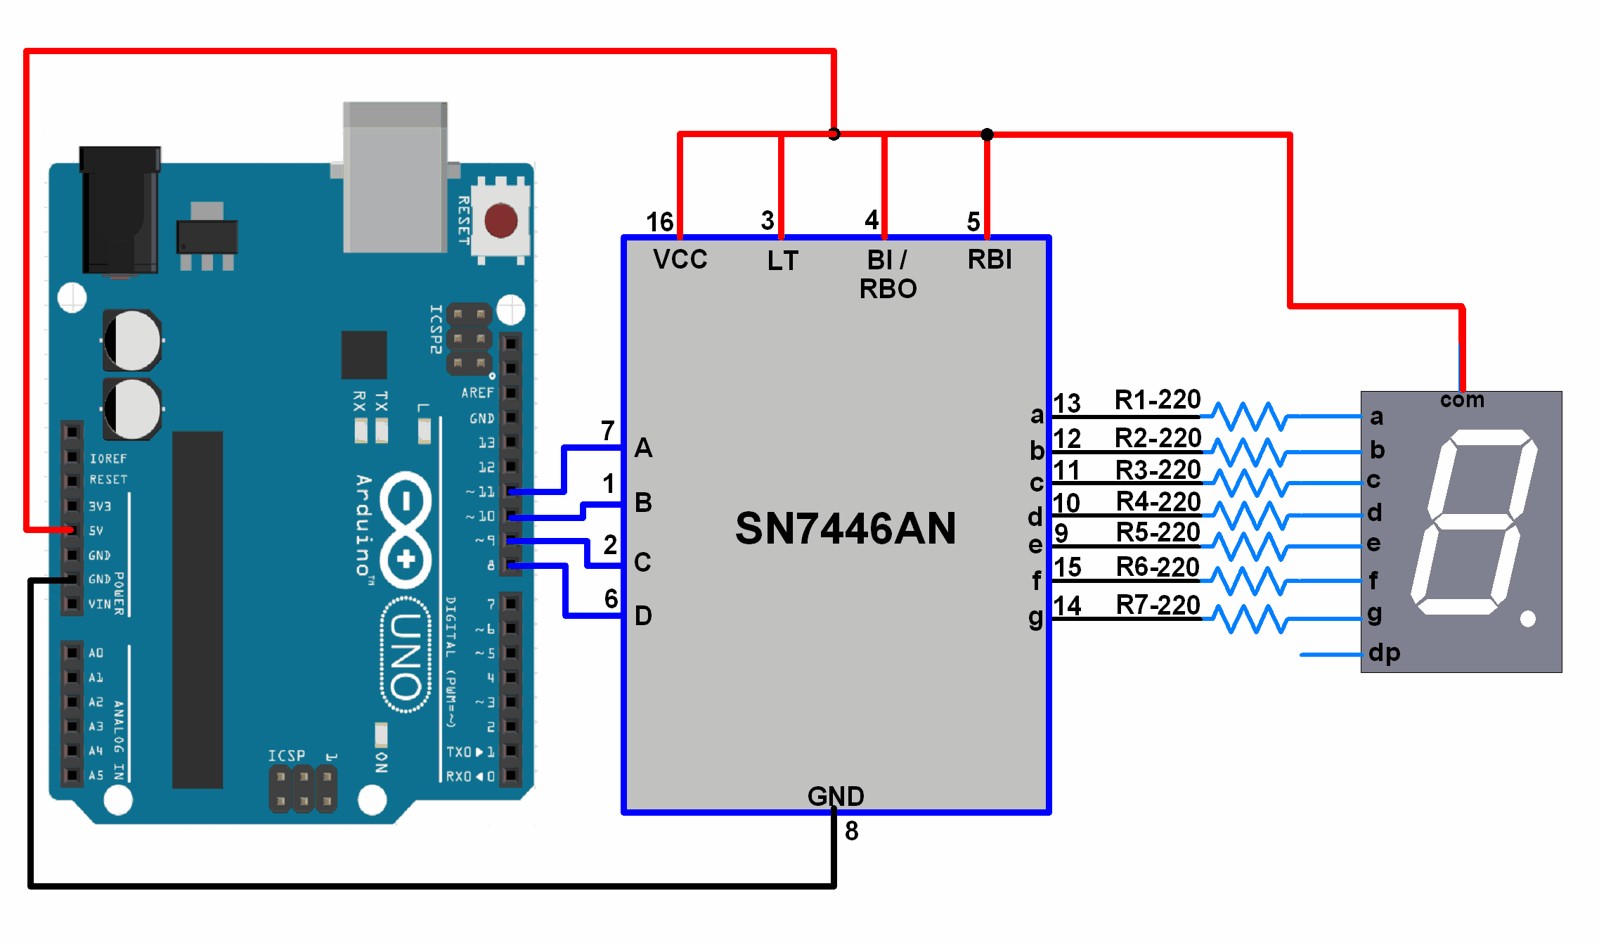 Interfacing 7 Segment Display Using SN7446AN Driver with Arduino UNO